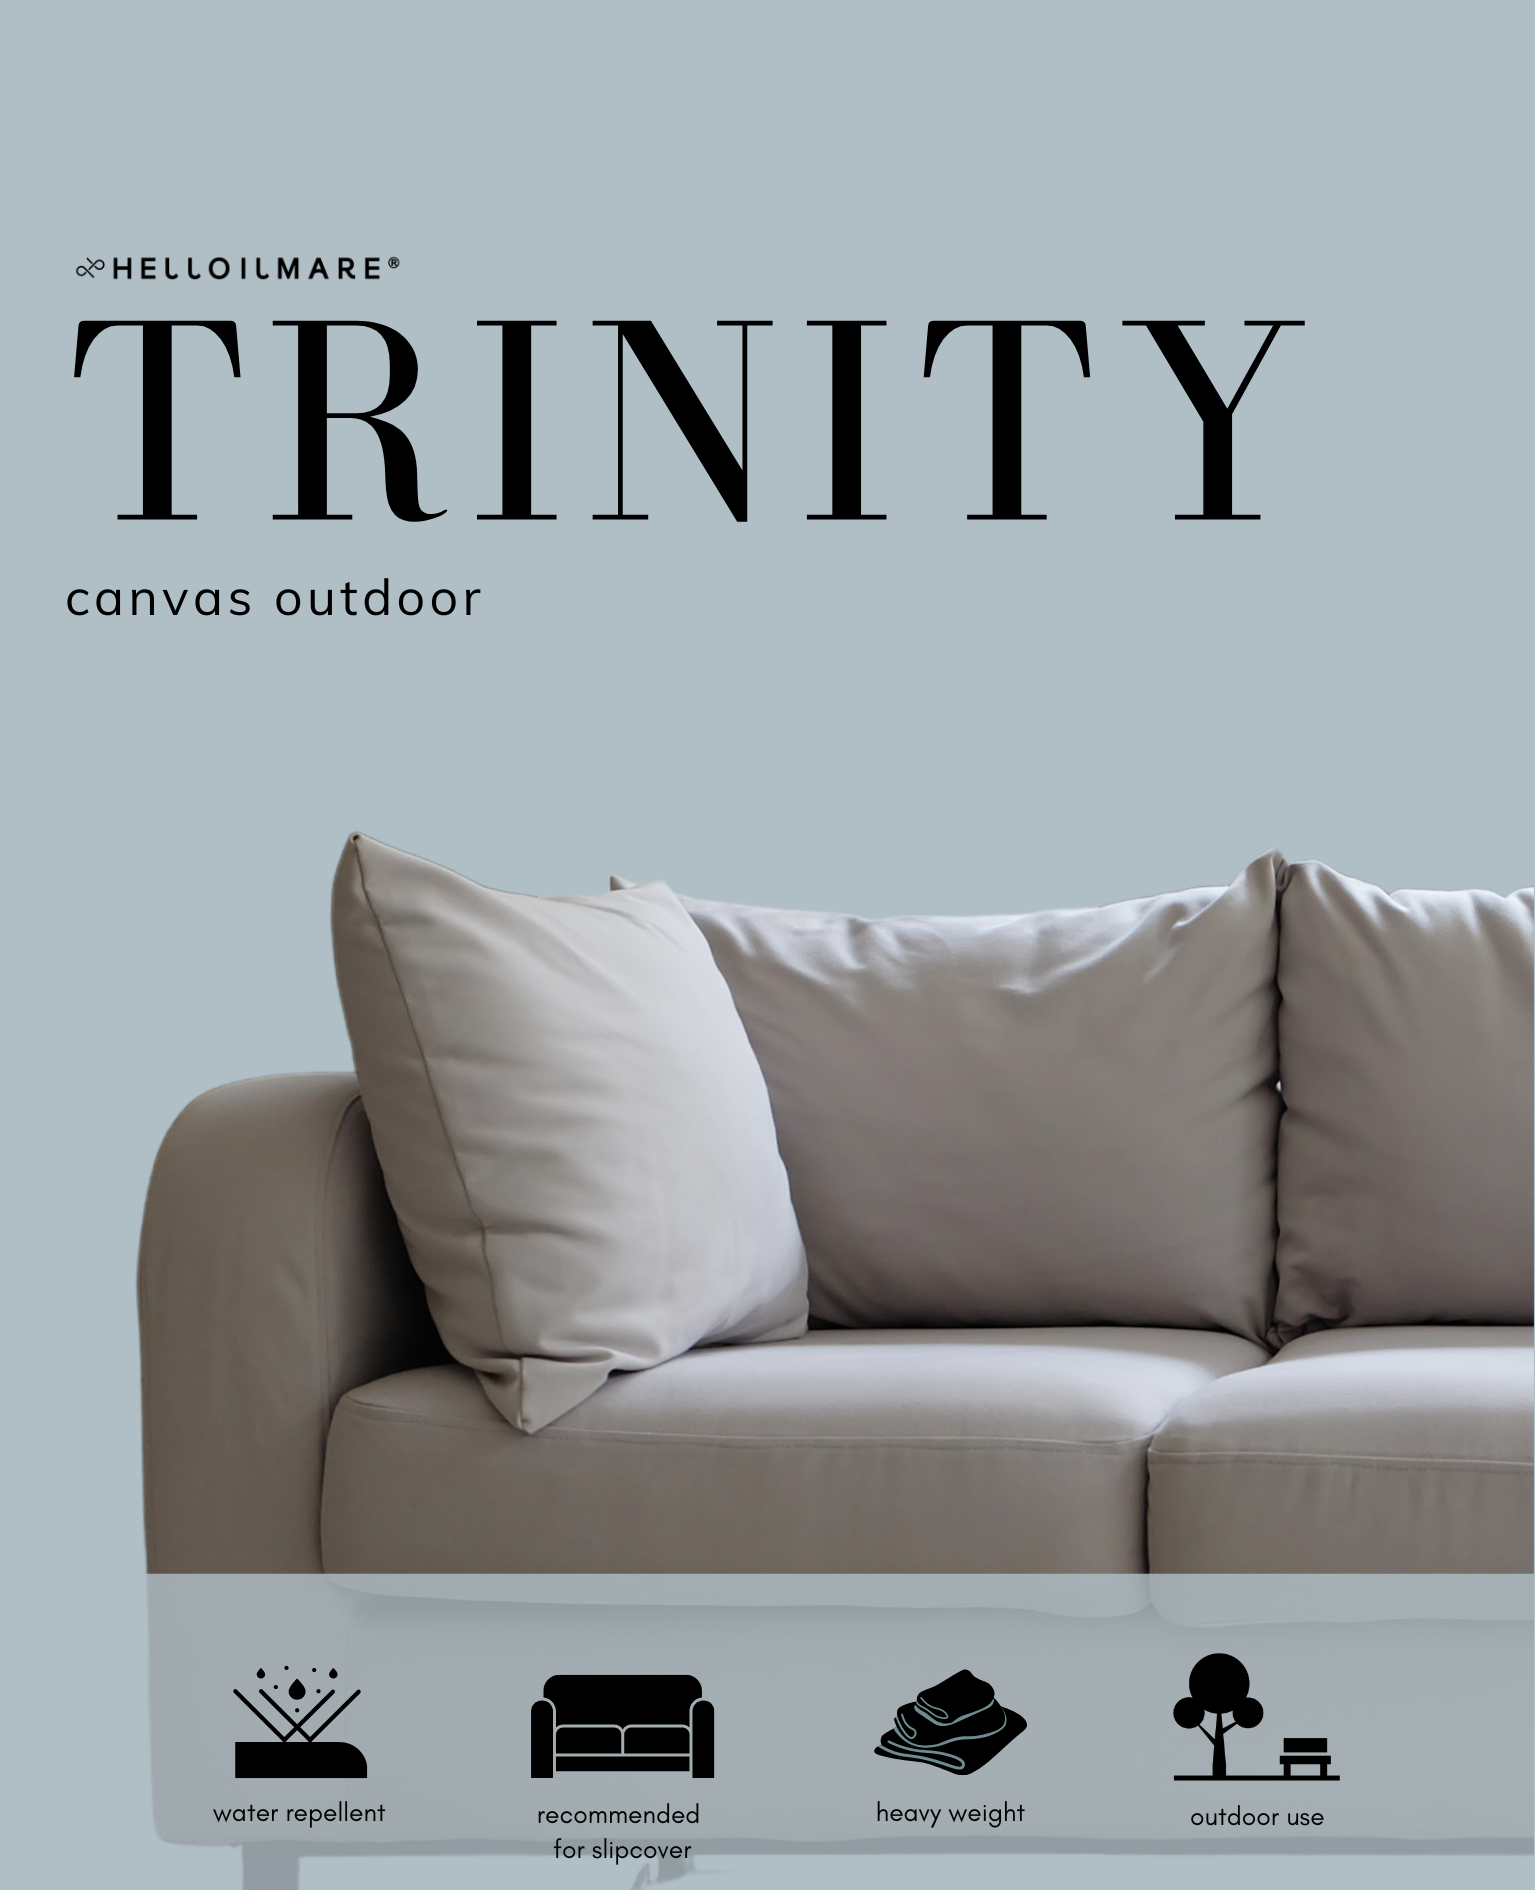 1 Seater Trinity - Helloilmare